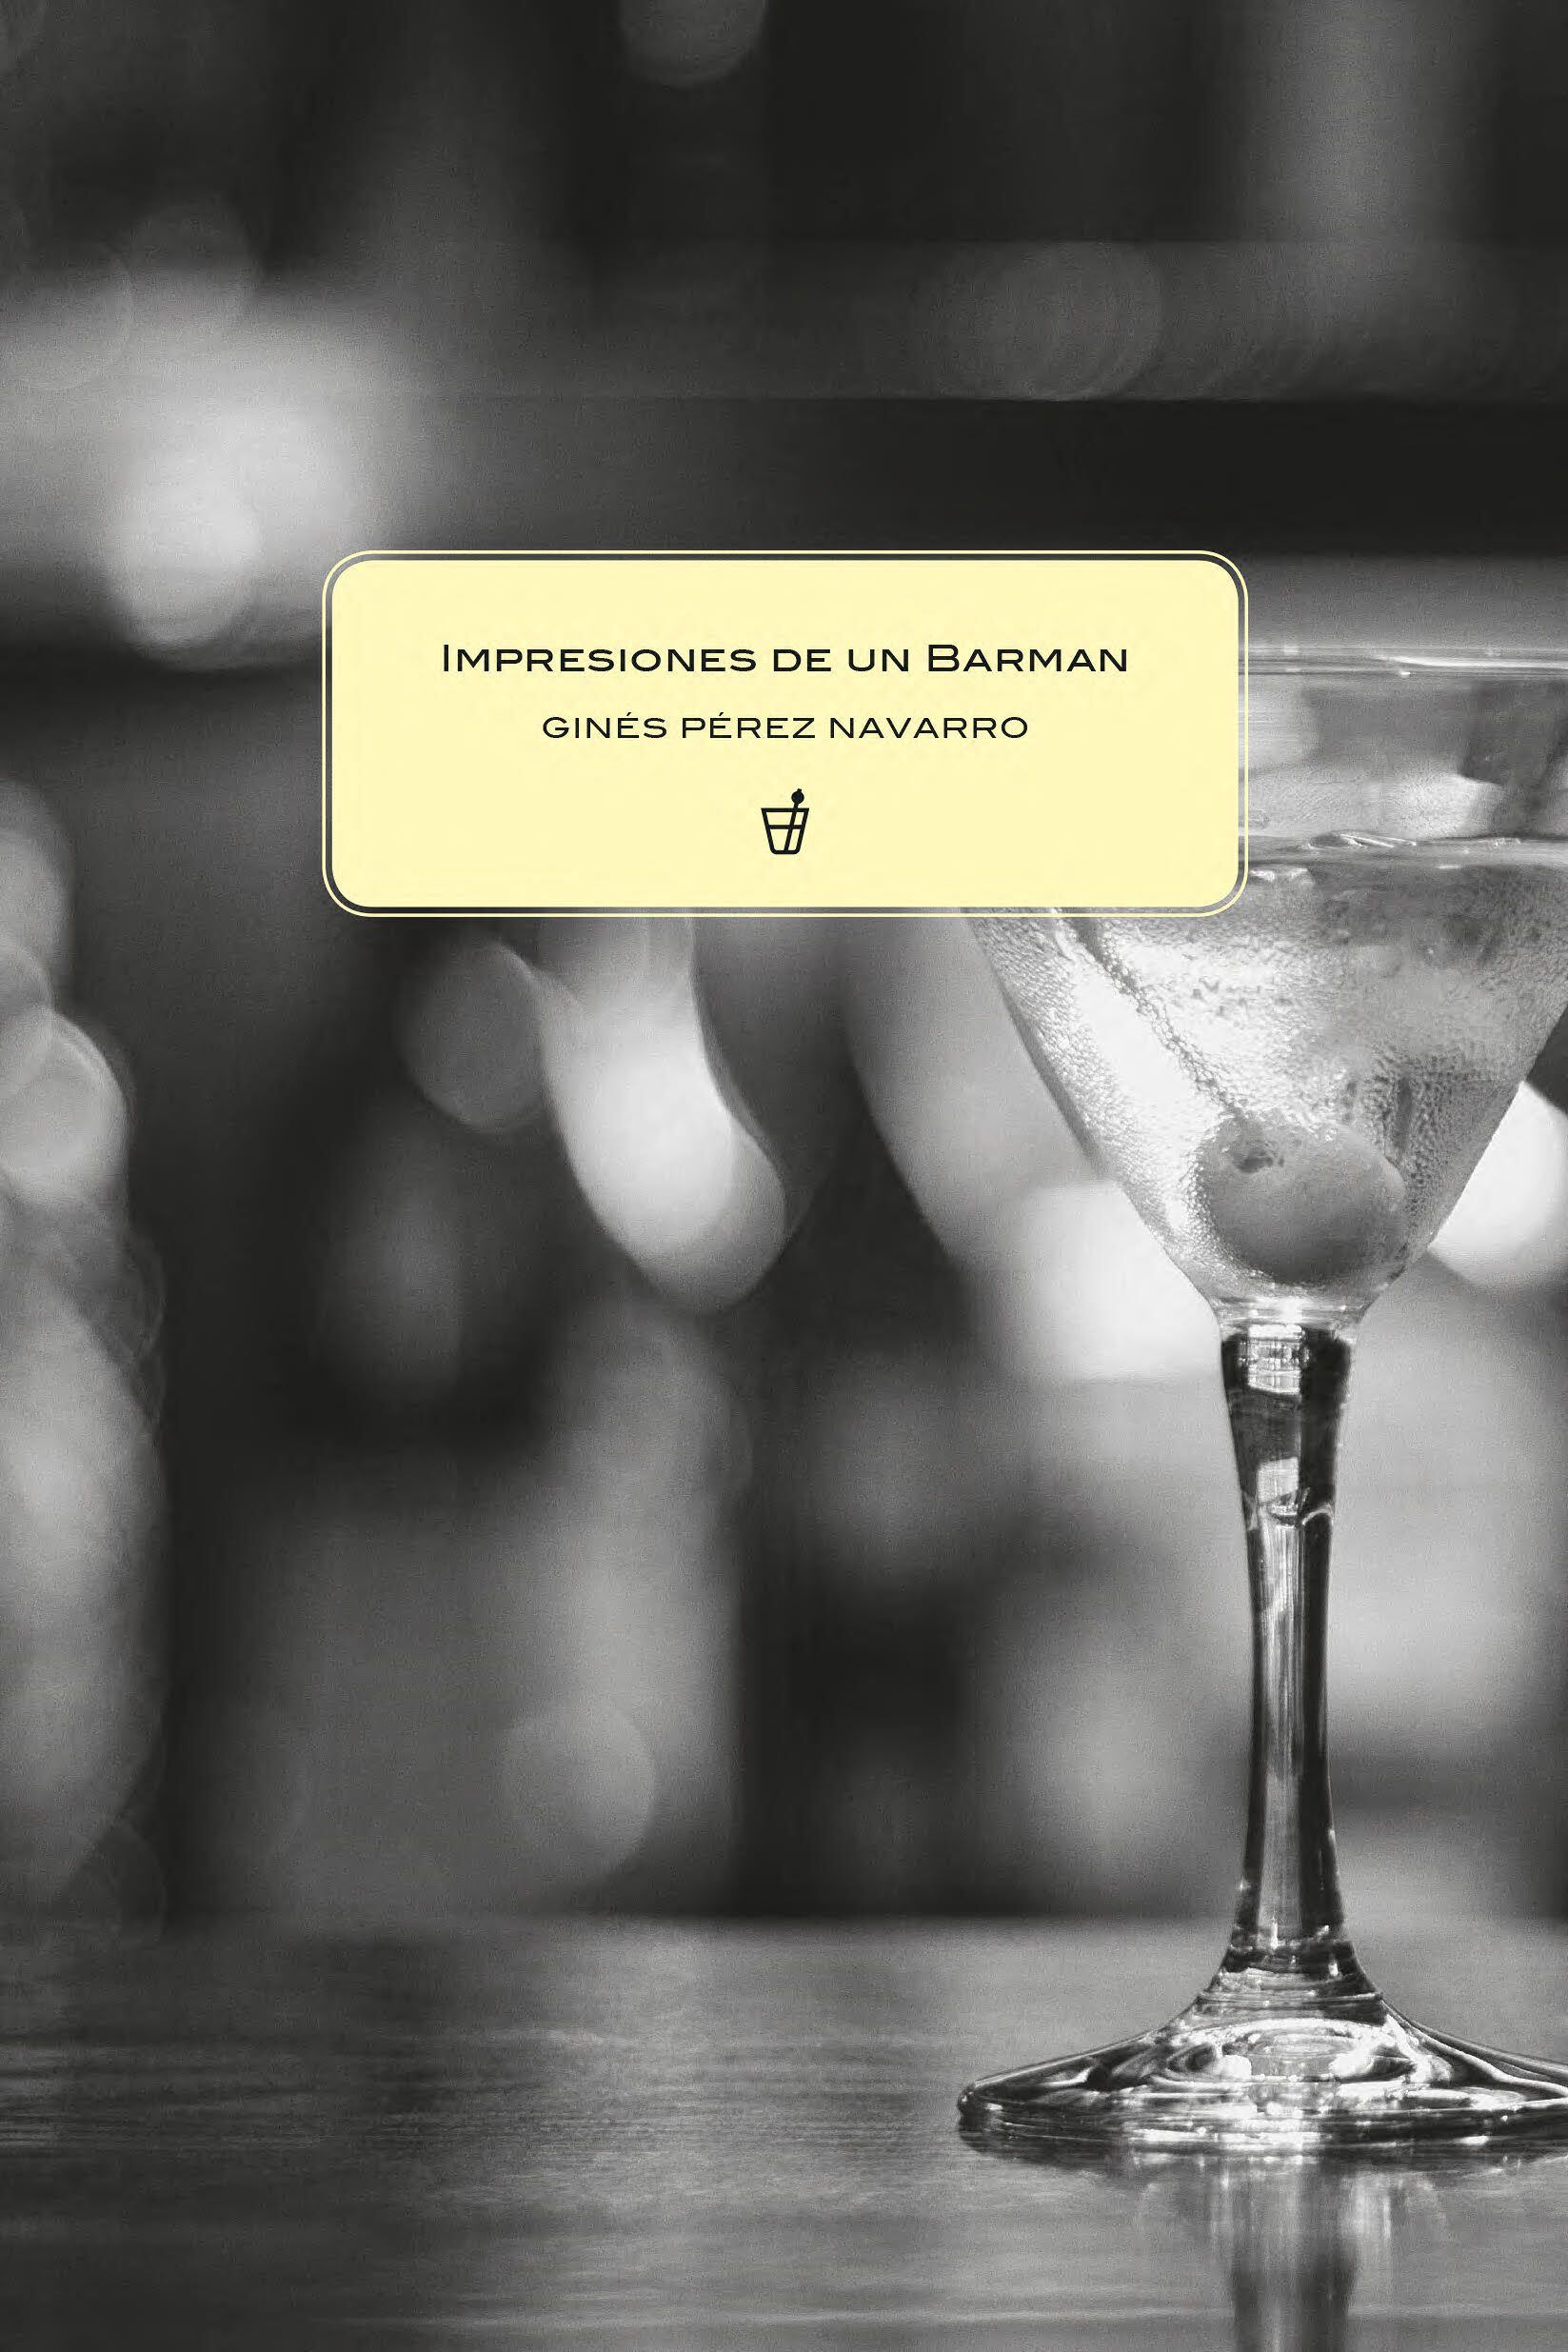 Portada de Impresiones de un barman, de Ginés Pérez Navarro (Editorial Ifeelbook).